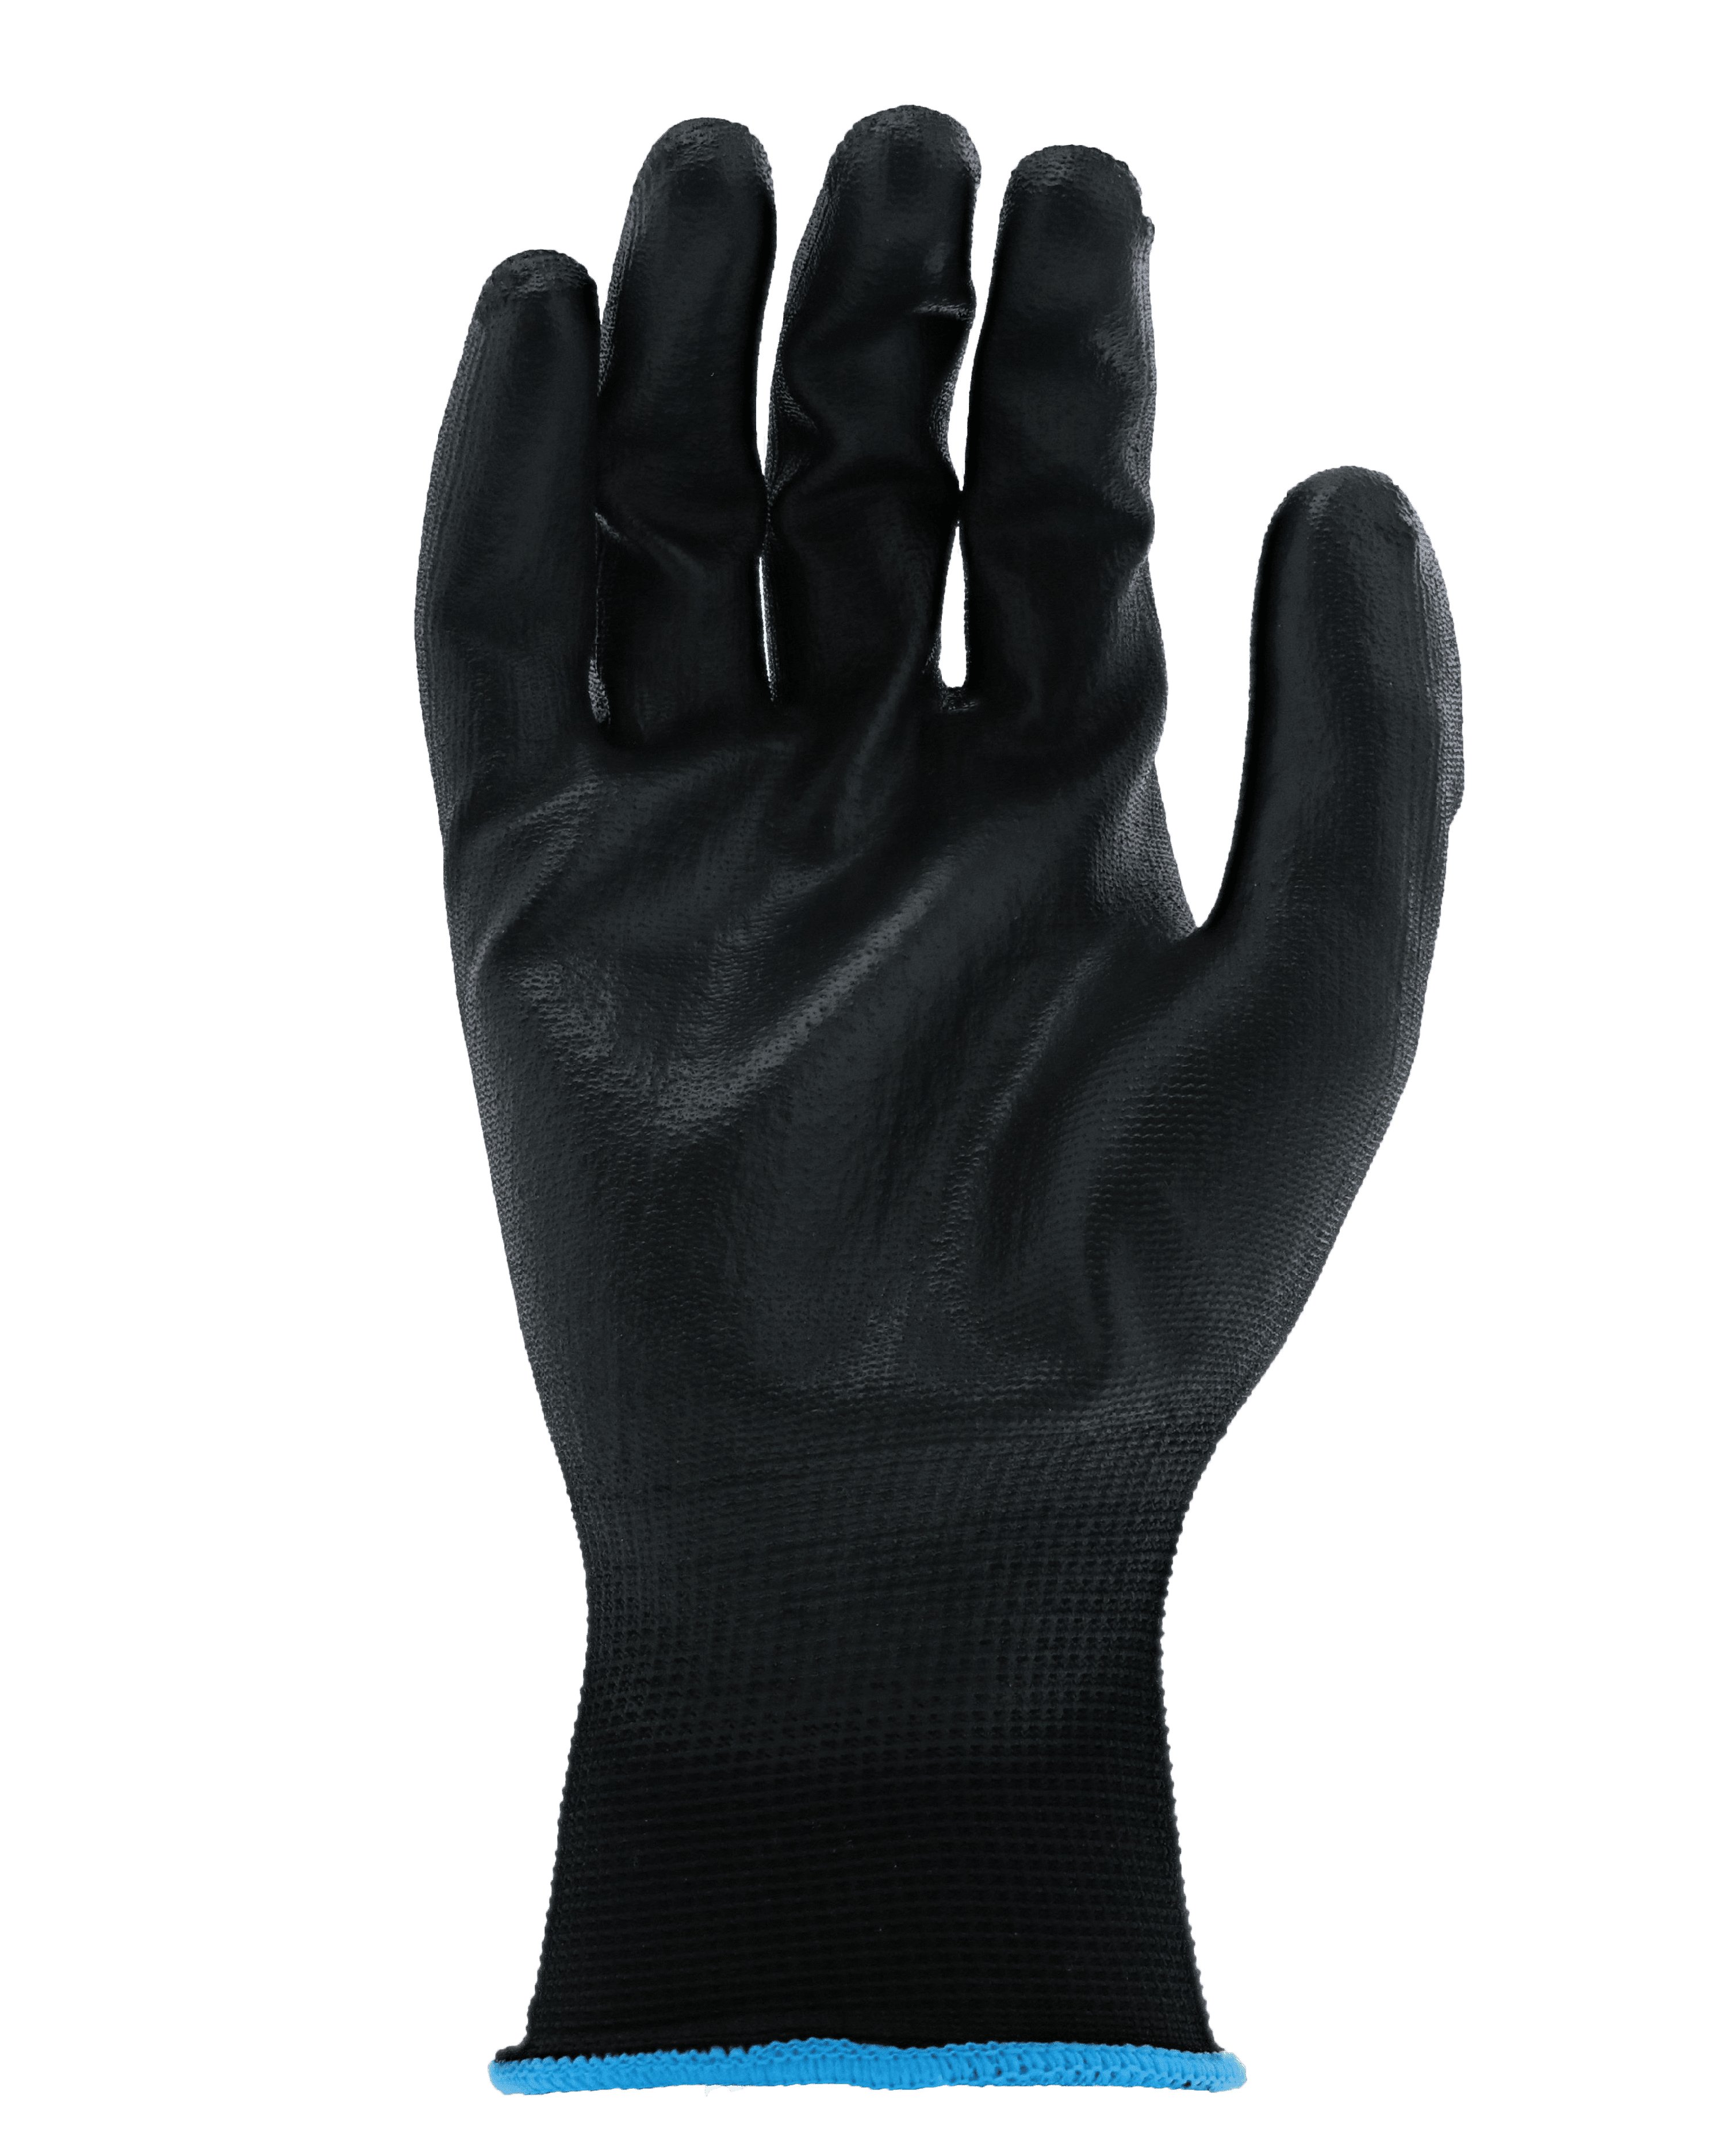 Grease Monkey Gorilla Grip Gloves X-Large - TSZ Retail Store Limited